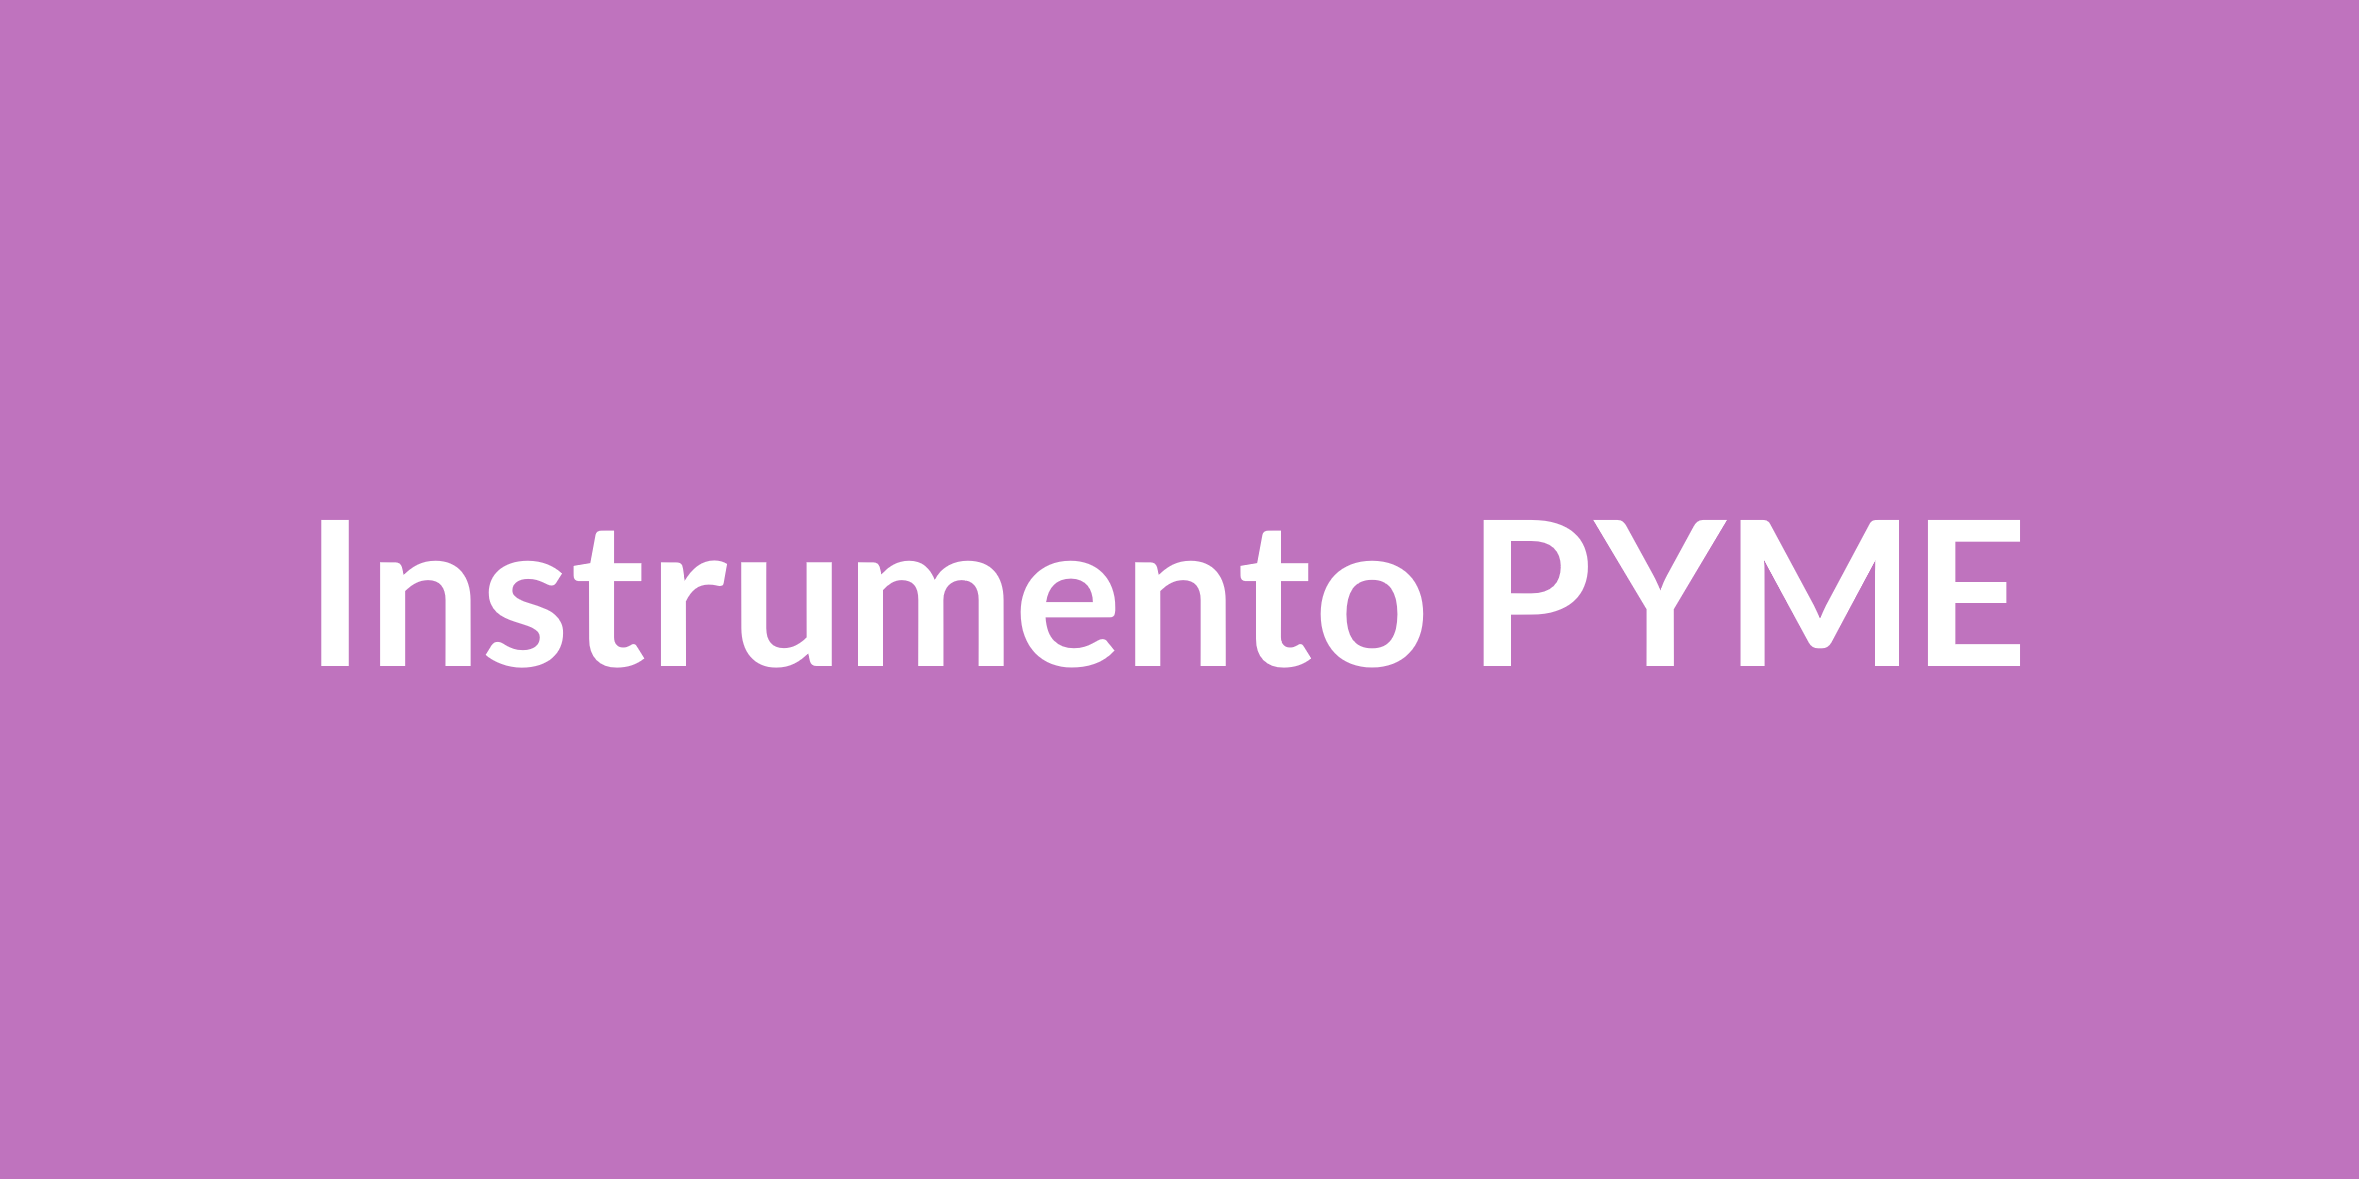 Instrument PME